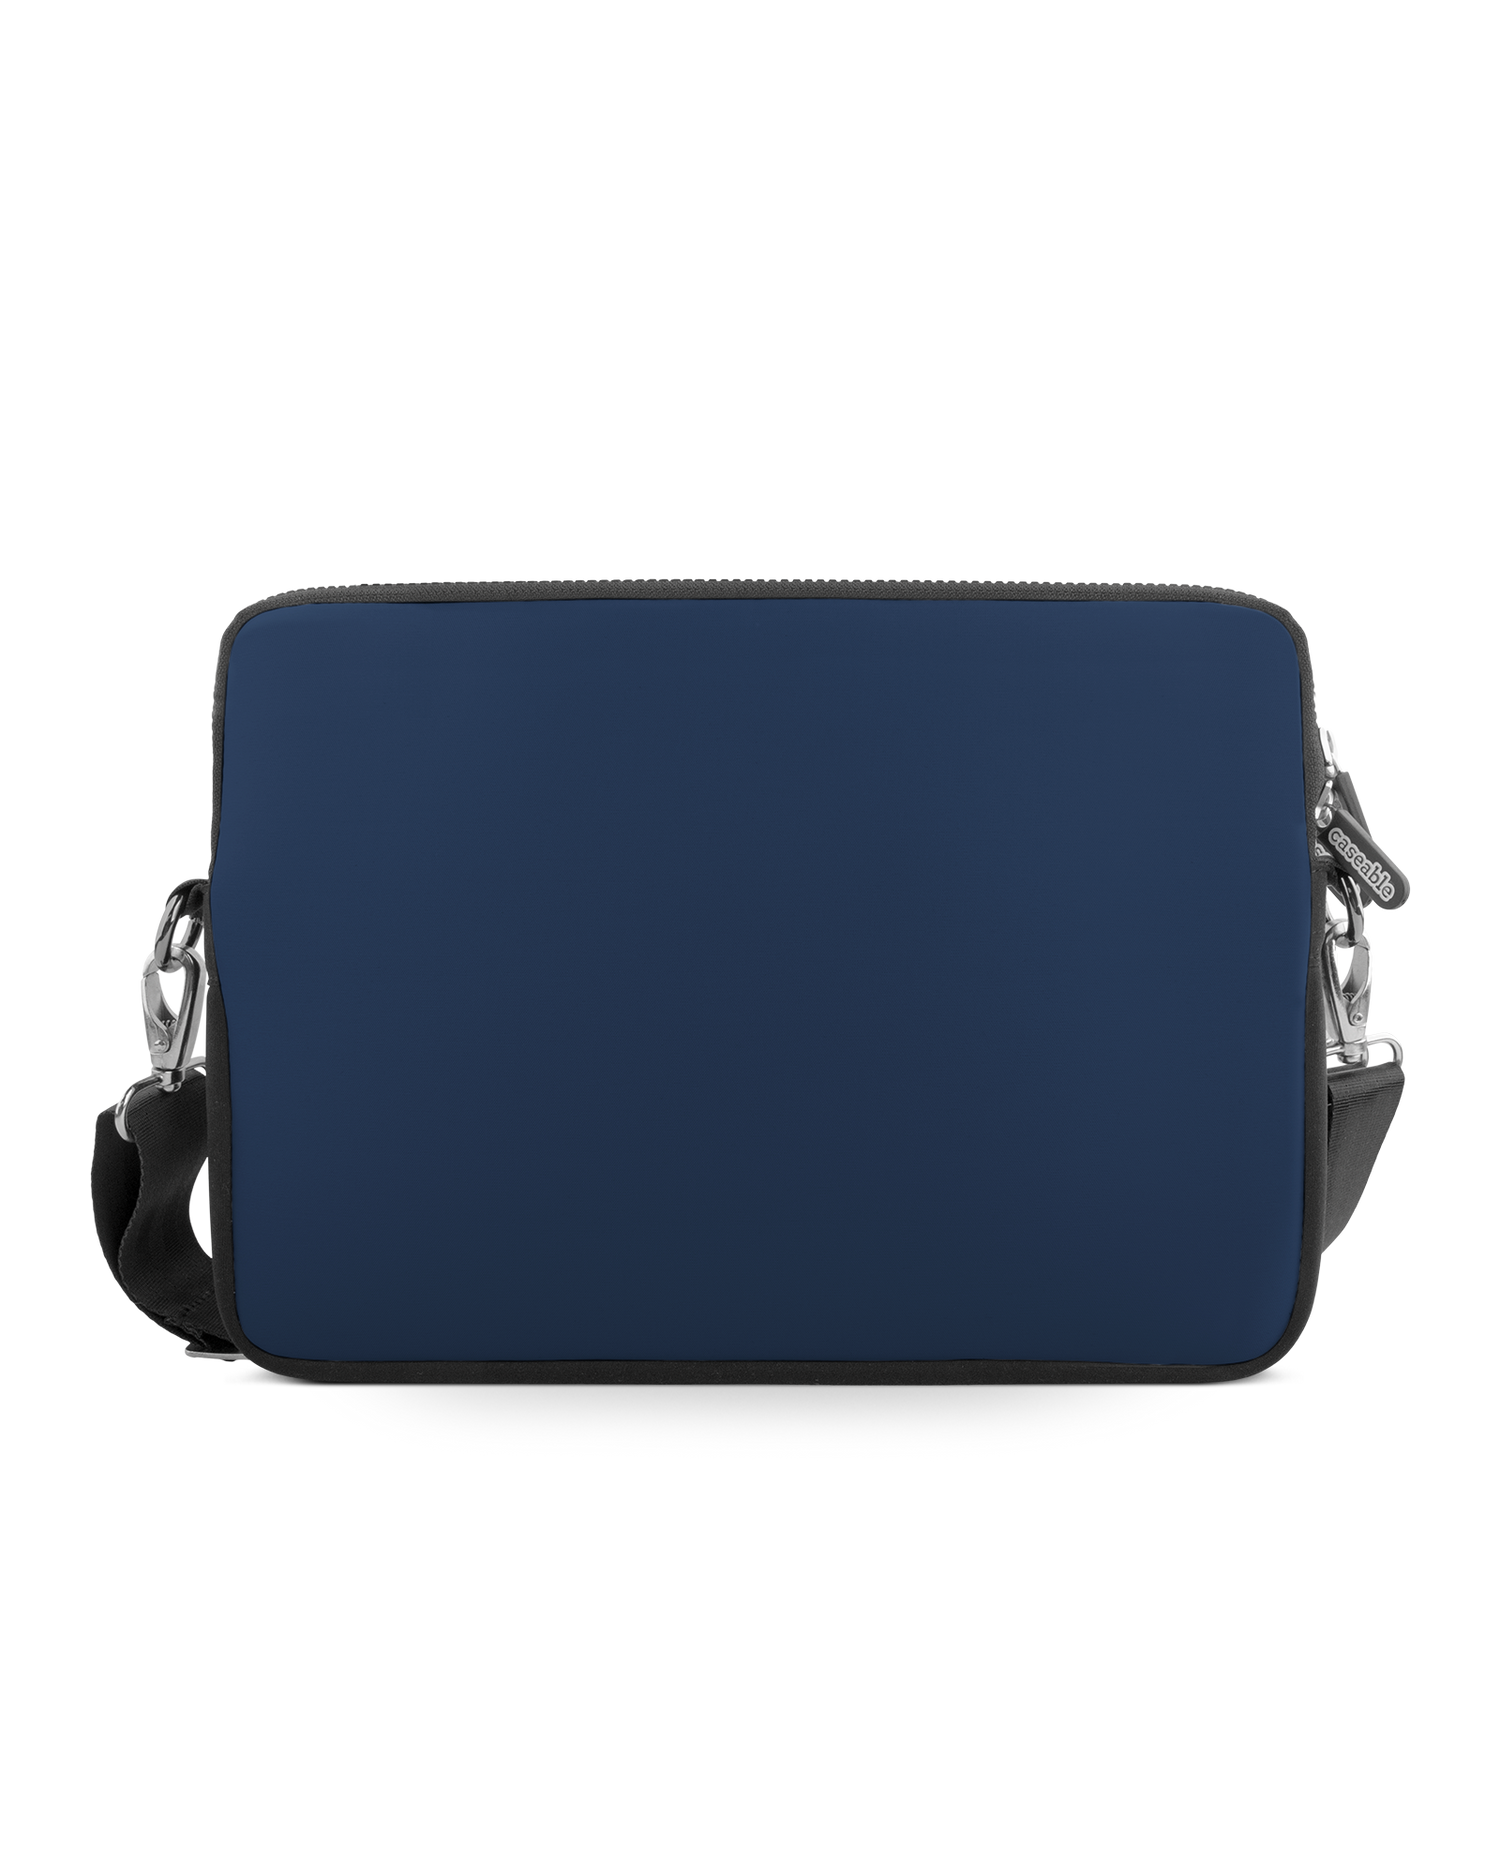 NAVY Premium Laptop Bag 13-14 inch: Front View